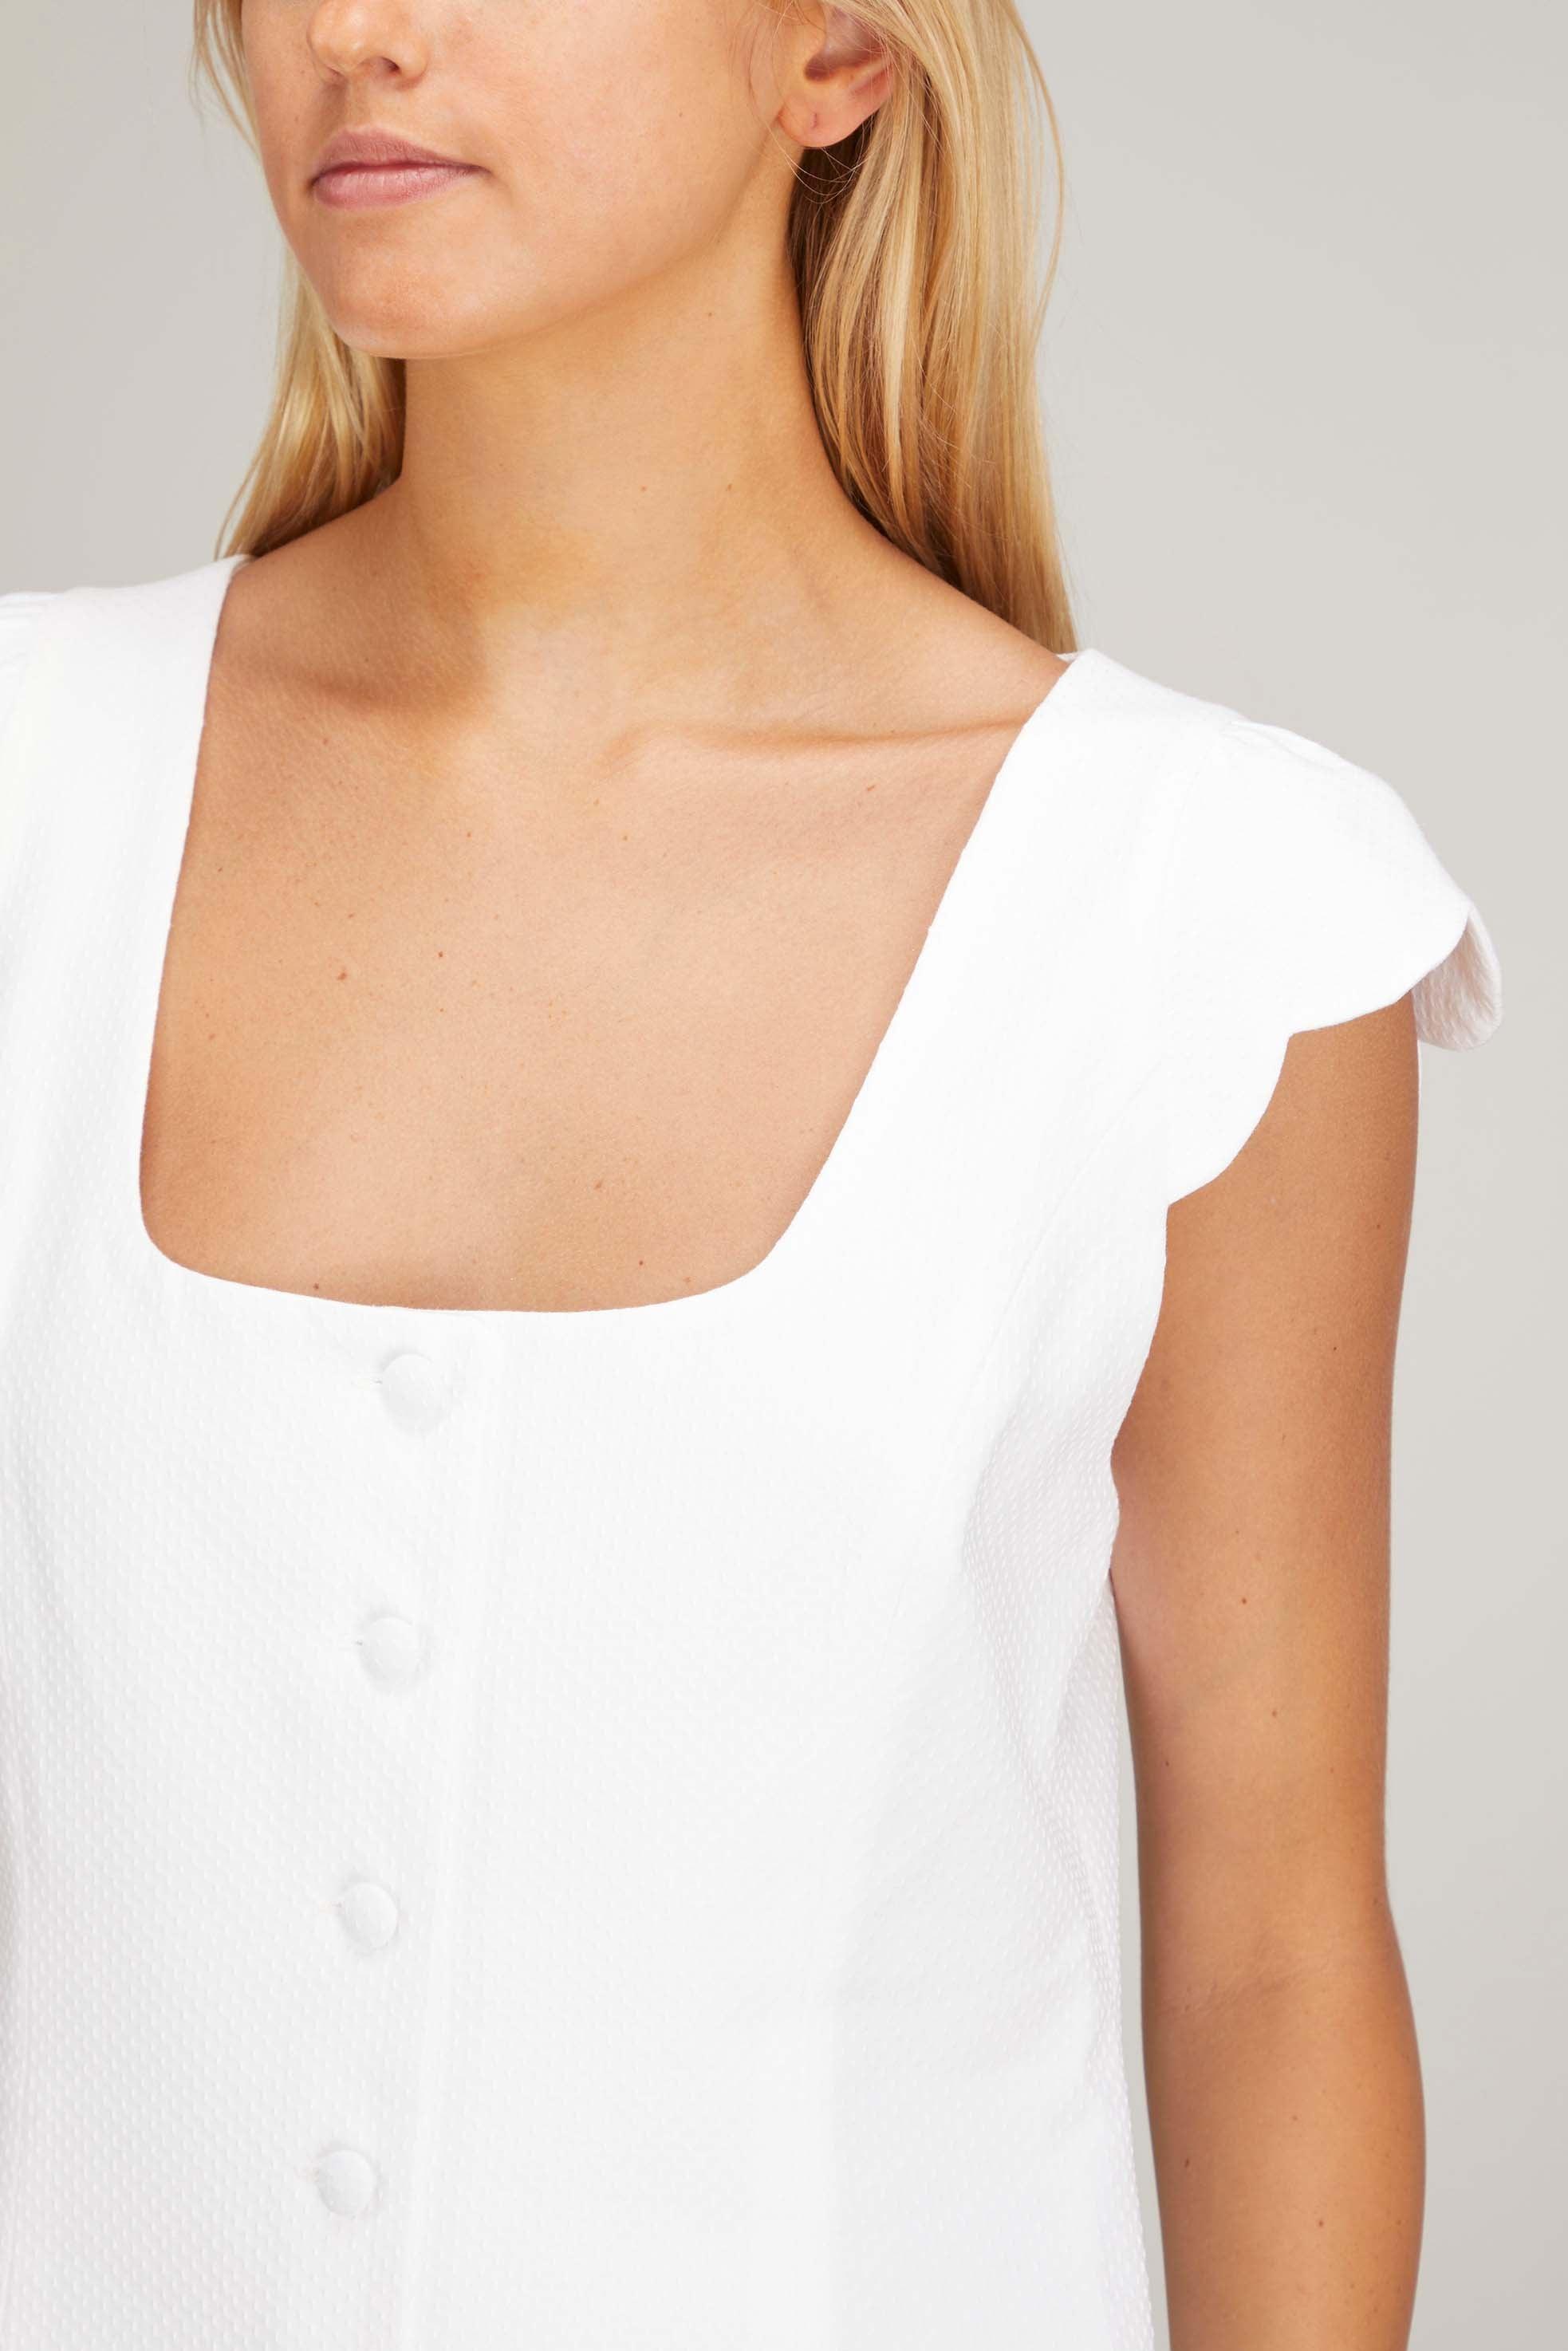 THE SHIFT DRESS in WHITE TEXTURED COTTON – Lisa Marie Fernandez